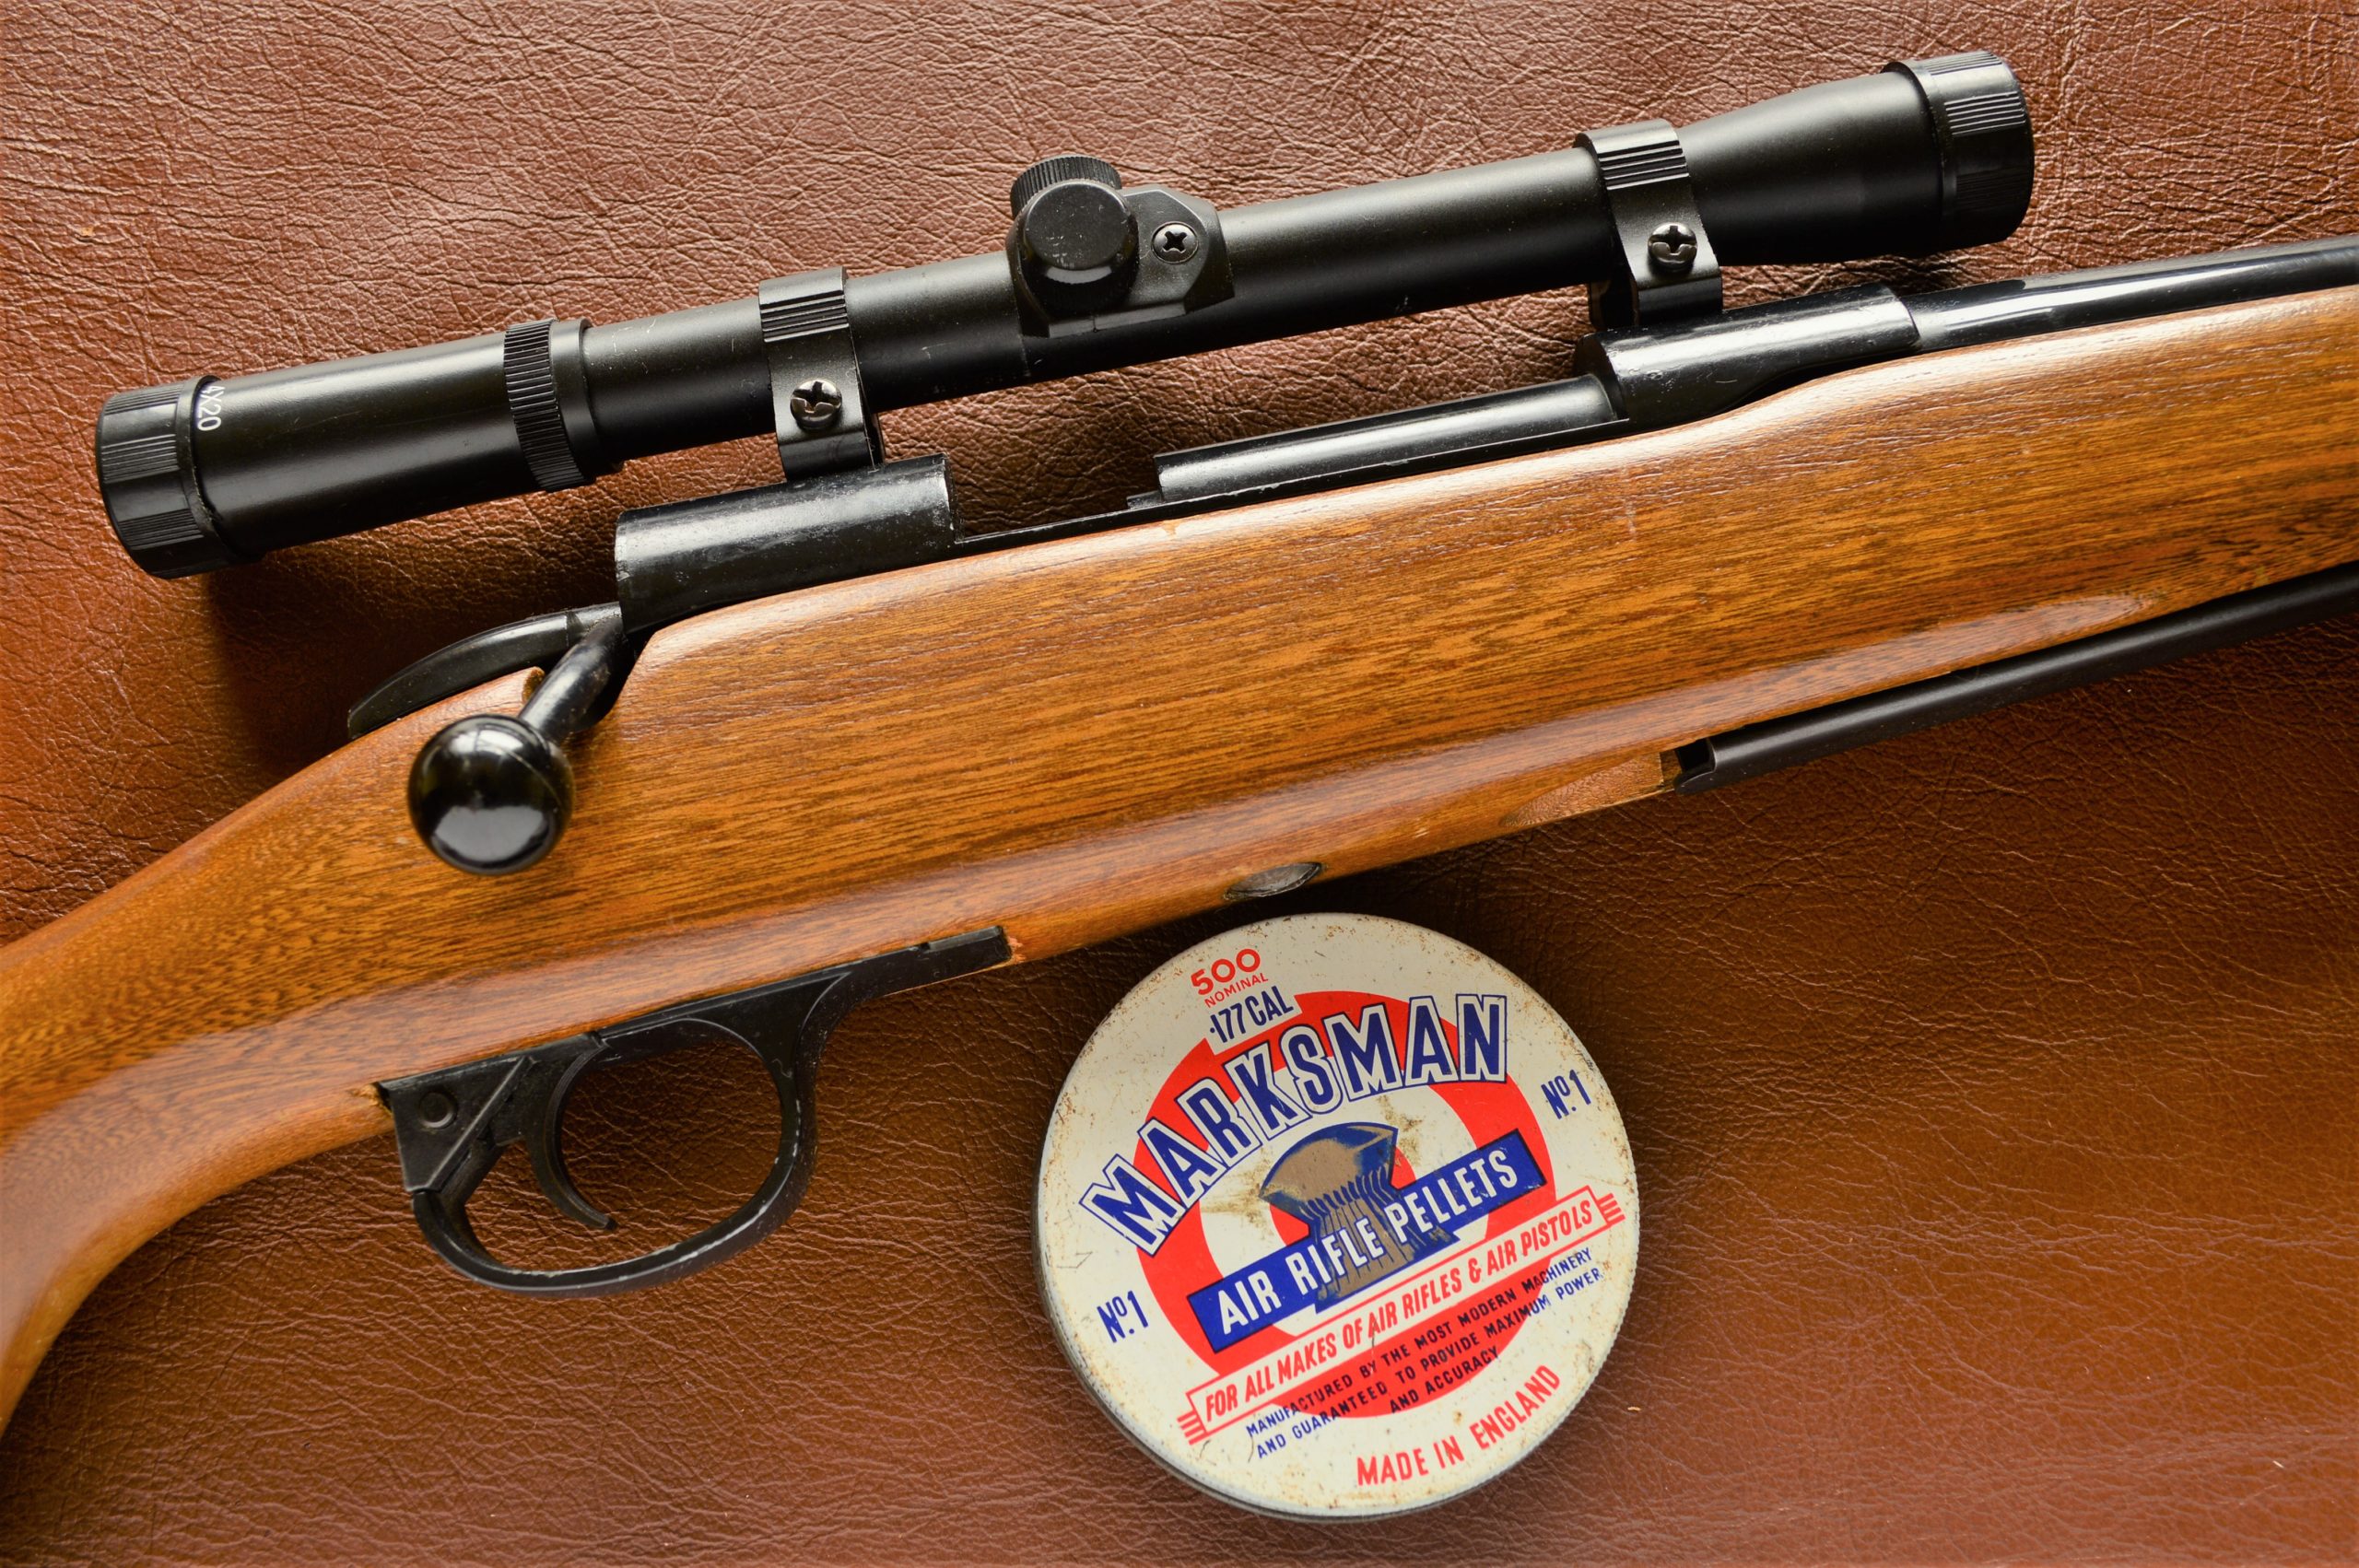 Marksman Airgun Pellets .22 Domed Air rifle pistol pellets 